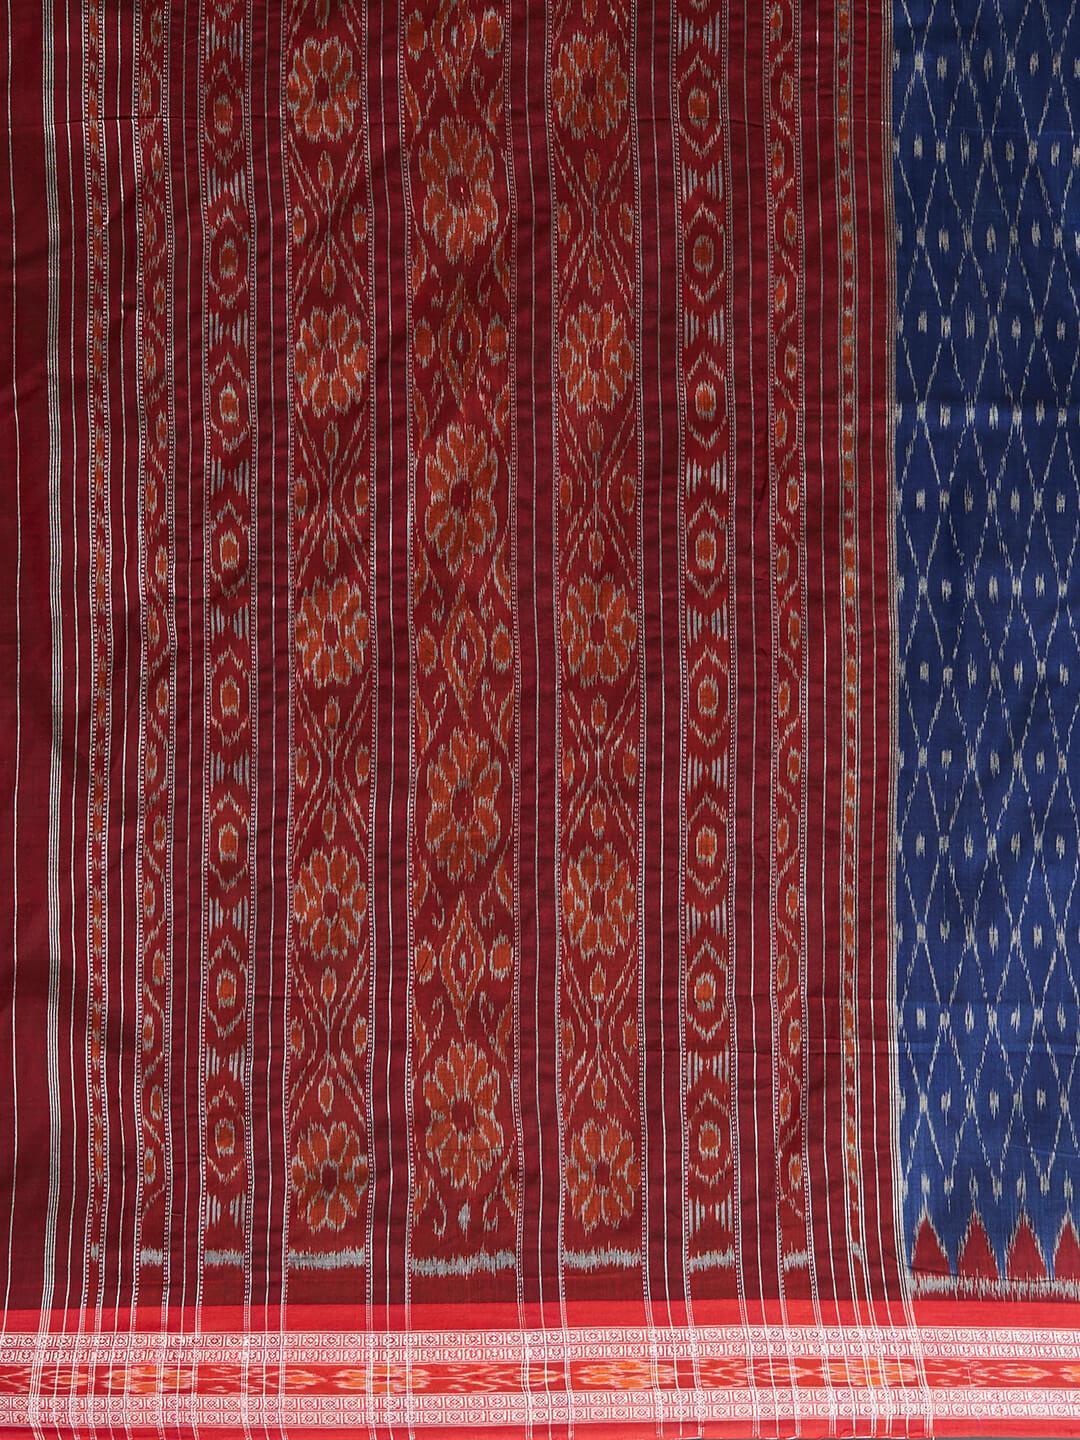 CraftsCollection.in - Blue and Red Sambalpuri Ikat Cotton Saree